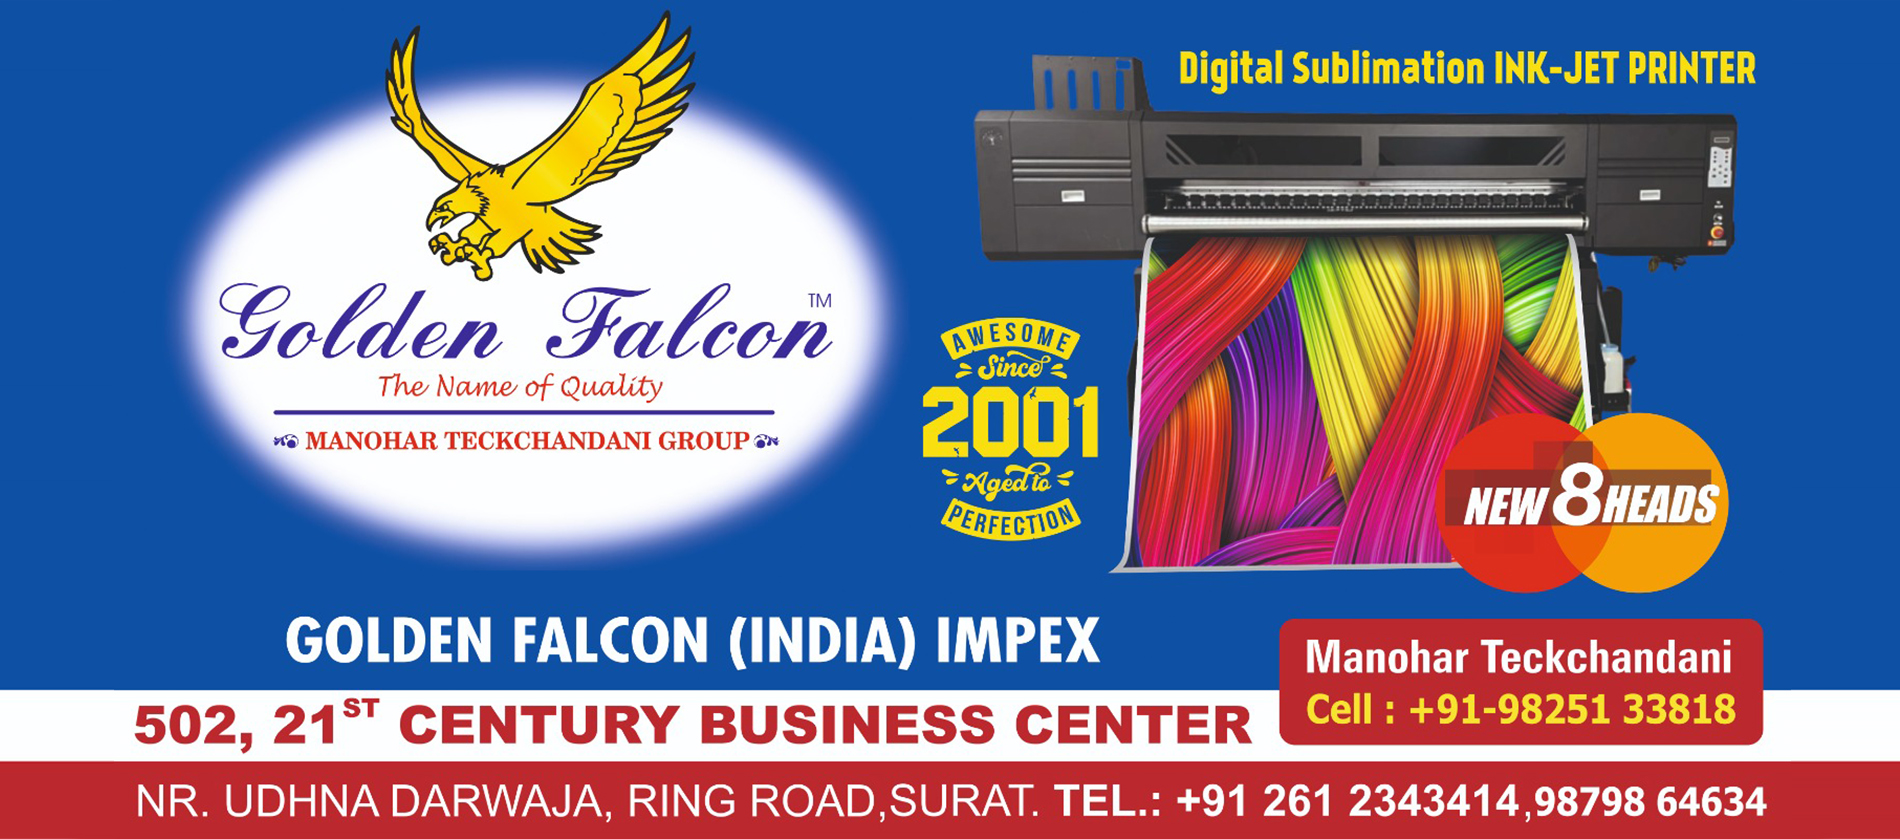 Golden Falcon India Impex Banner